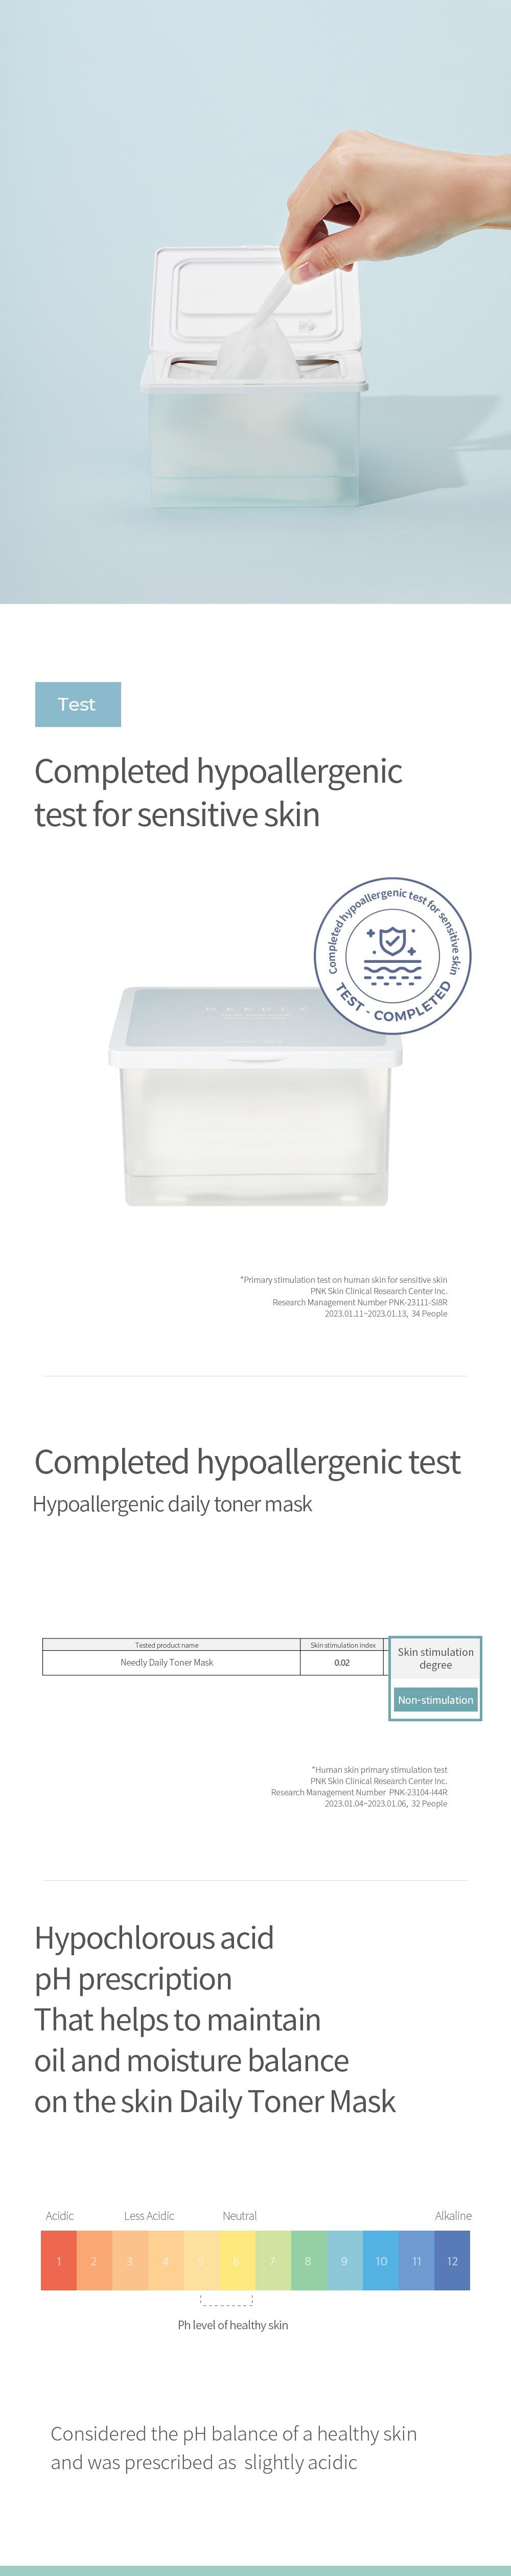 hyaluronic acid face mask for sensitive skin